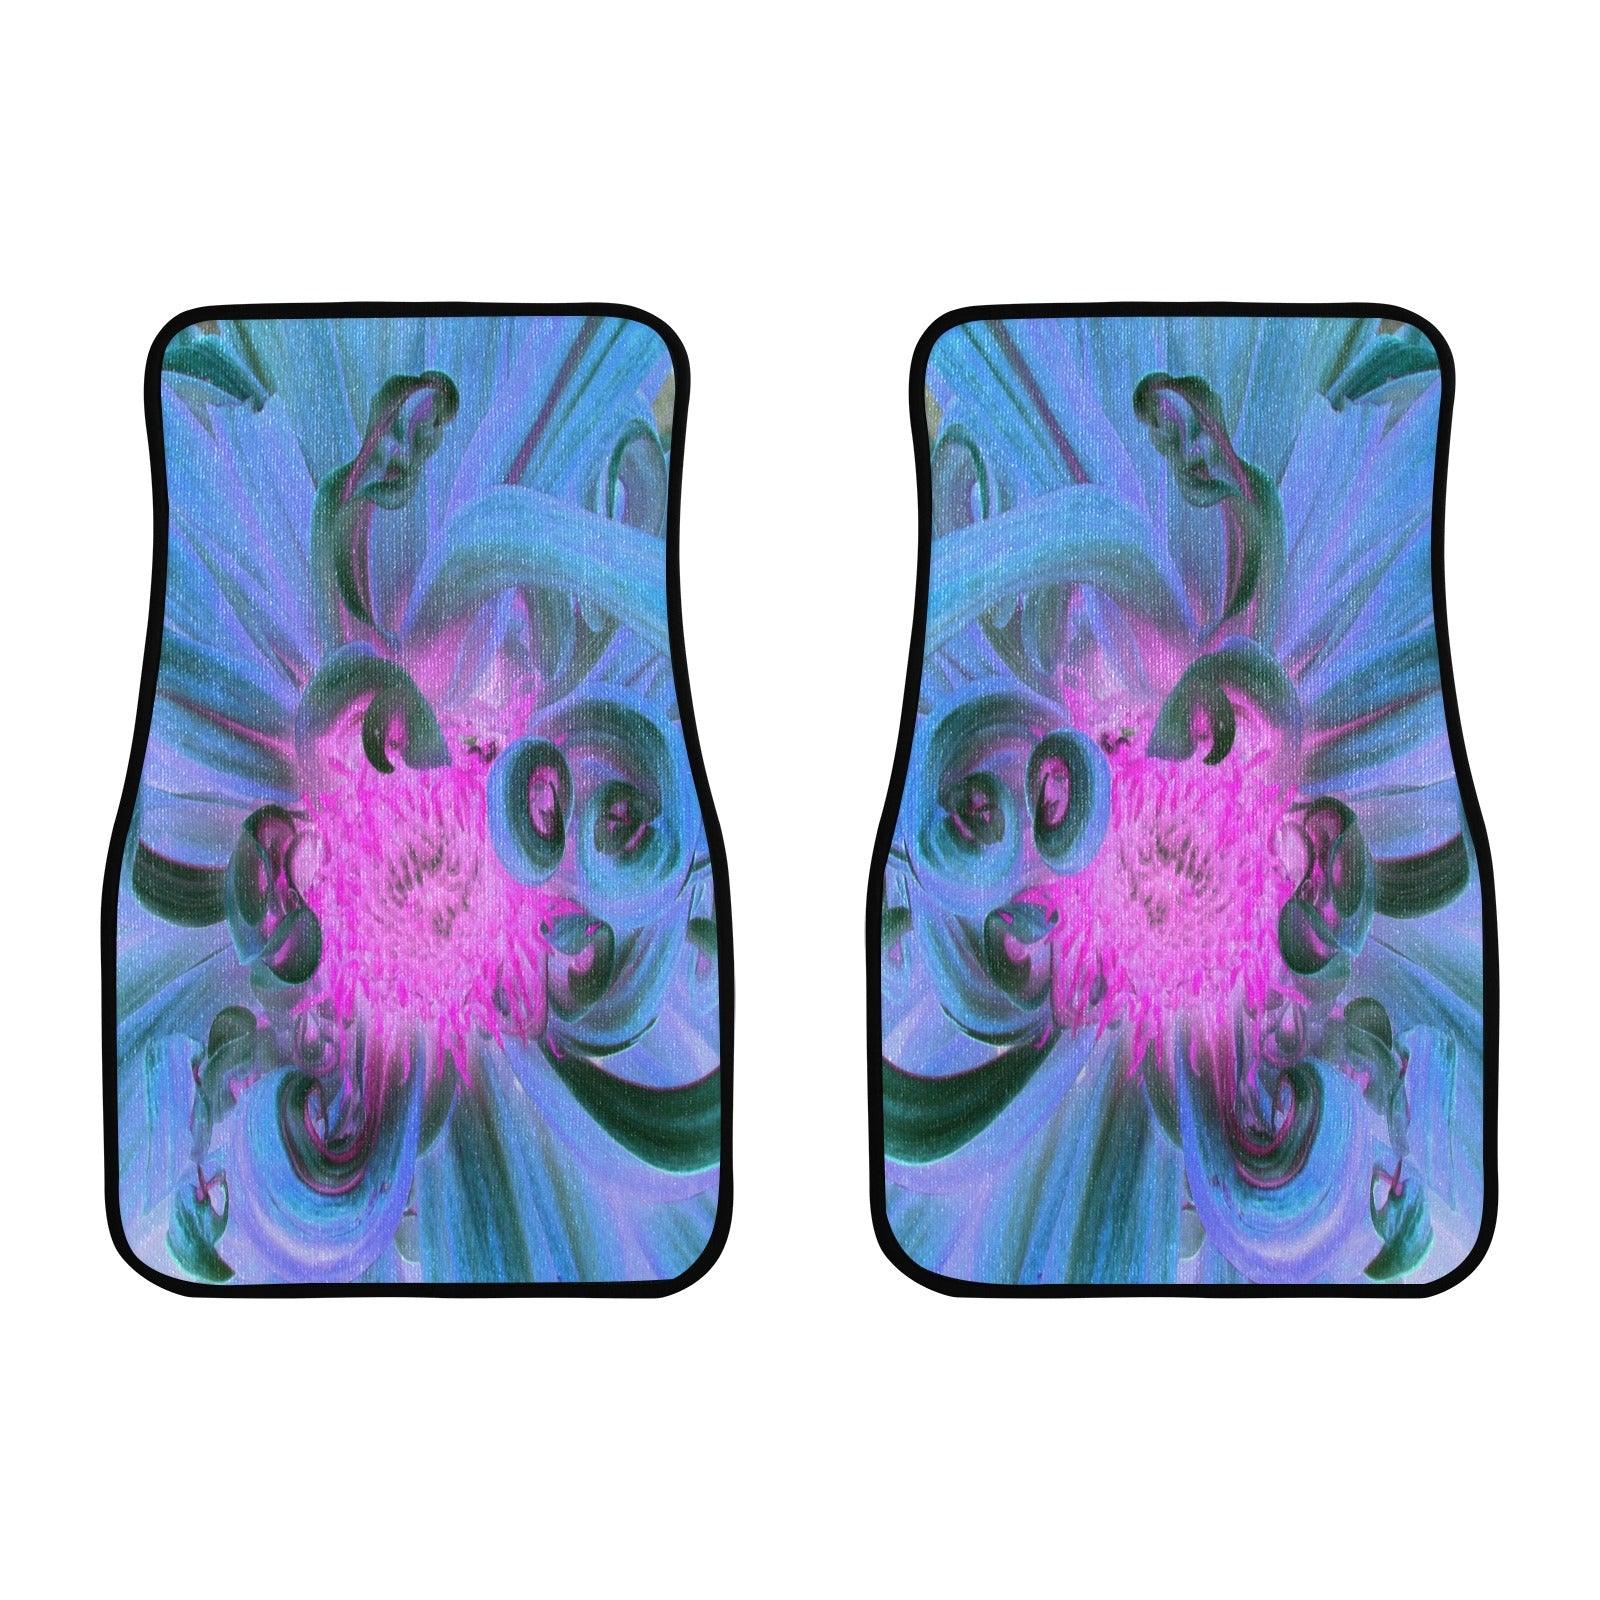 Car Floor Mats - Festive Blue and Hot Pink Dahlia Flower Petals - Front Set of 2